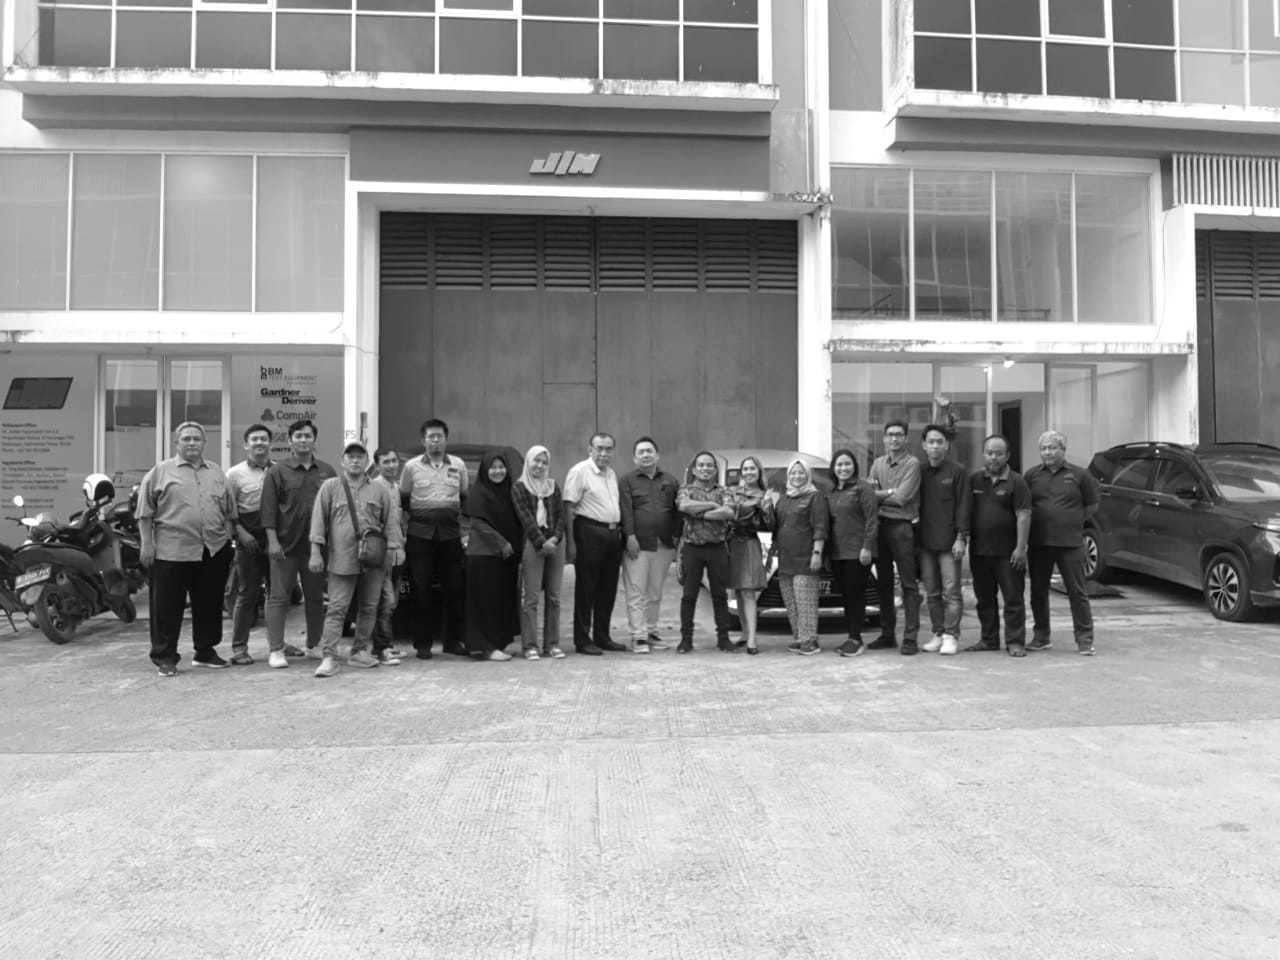 New Warehouse & Office owned by PT. JIM In Bizhub Industrial Area 52 Block F No.5 & No.6 Kariangau, Balikpapan – East Kalimantan, 2020